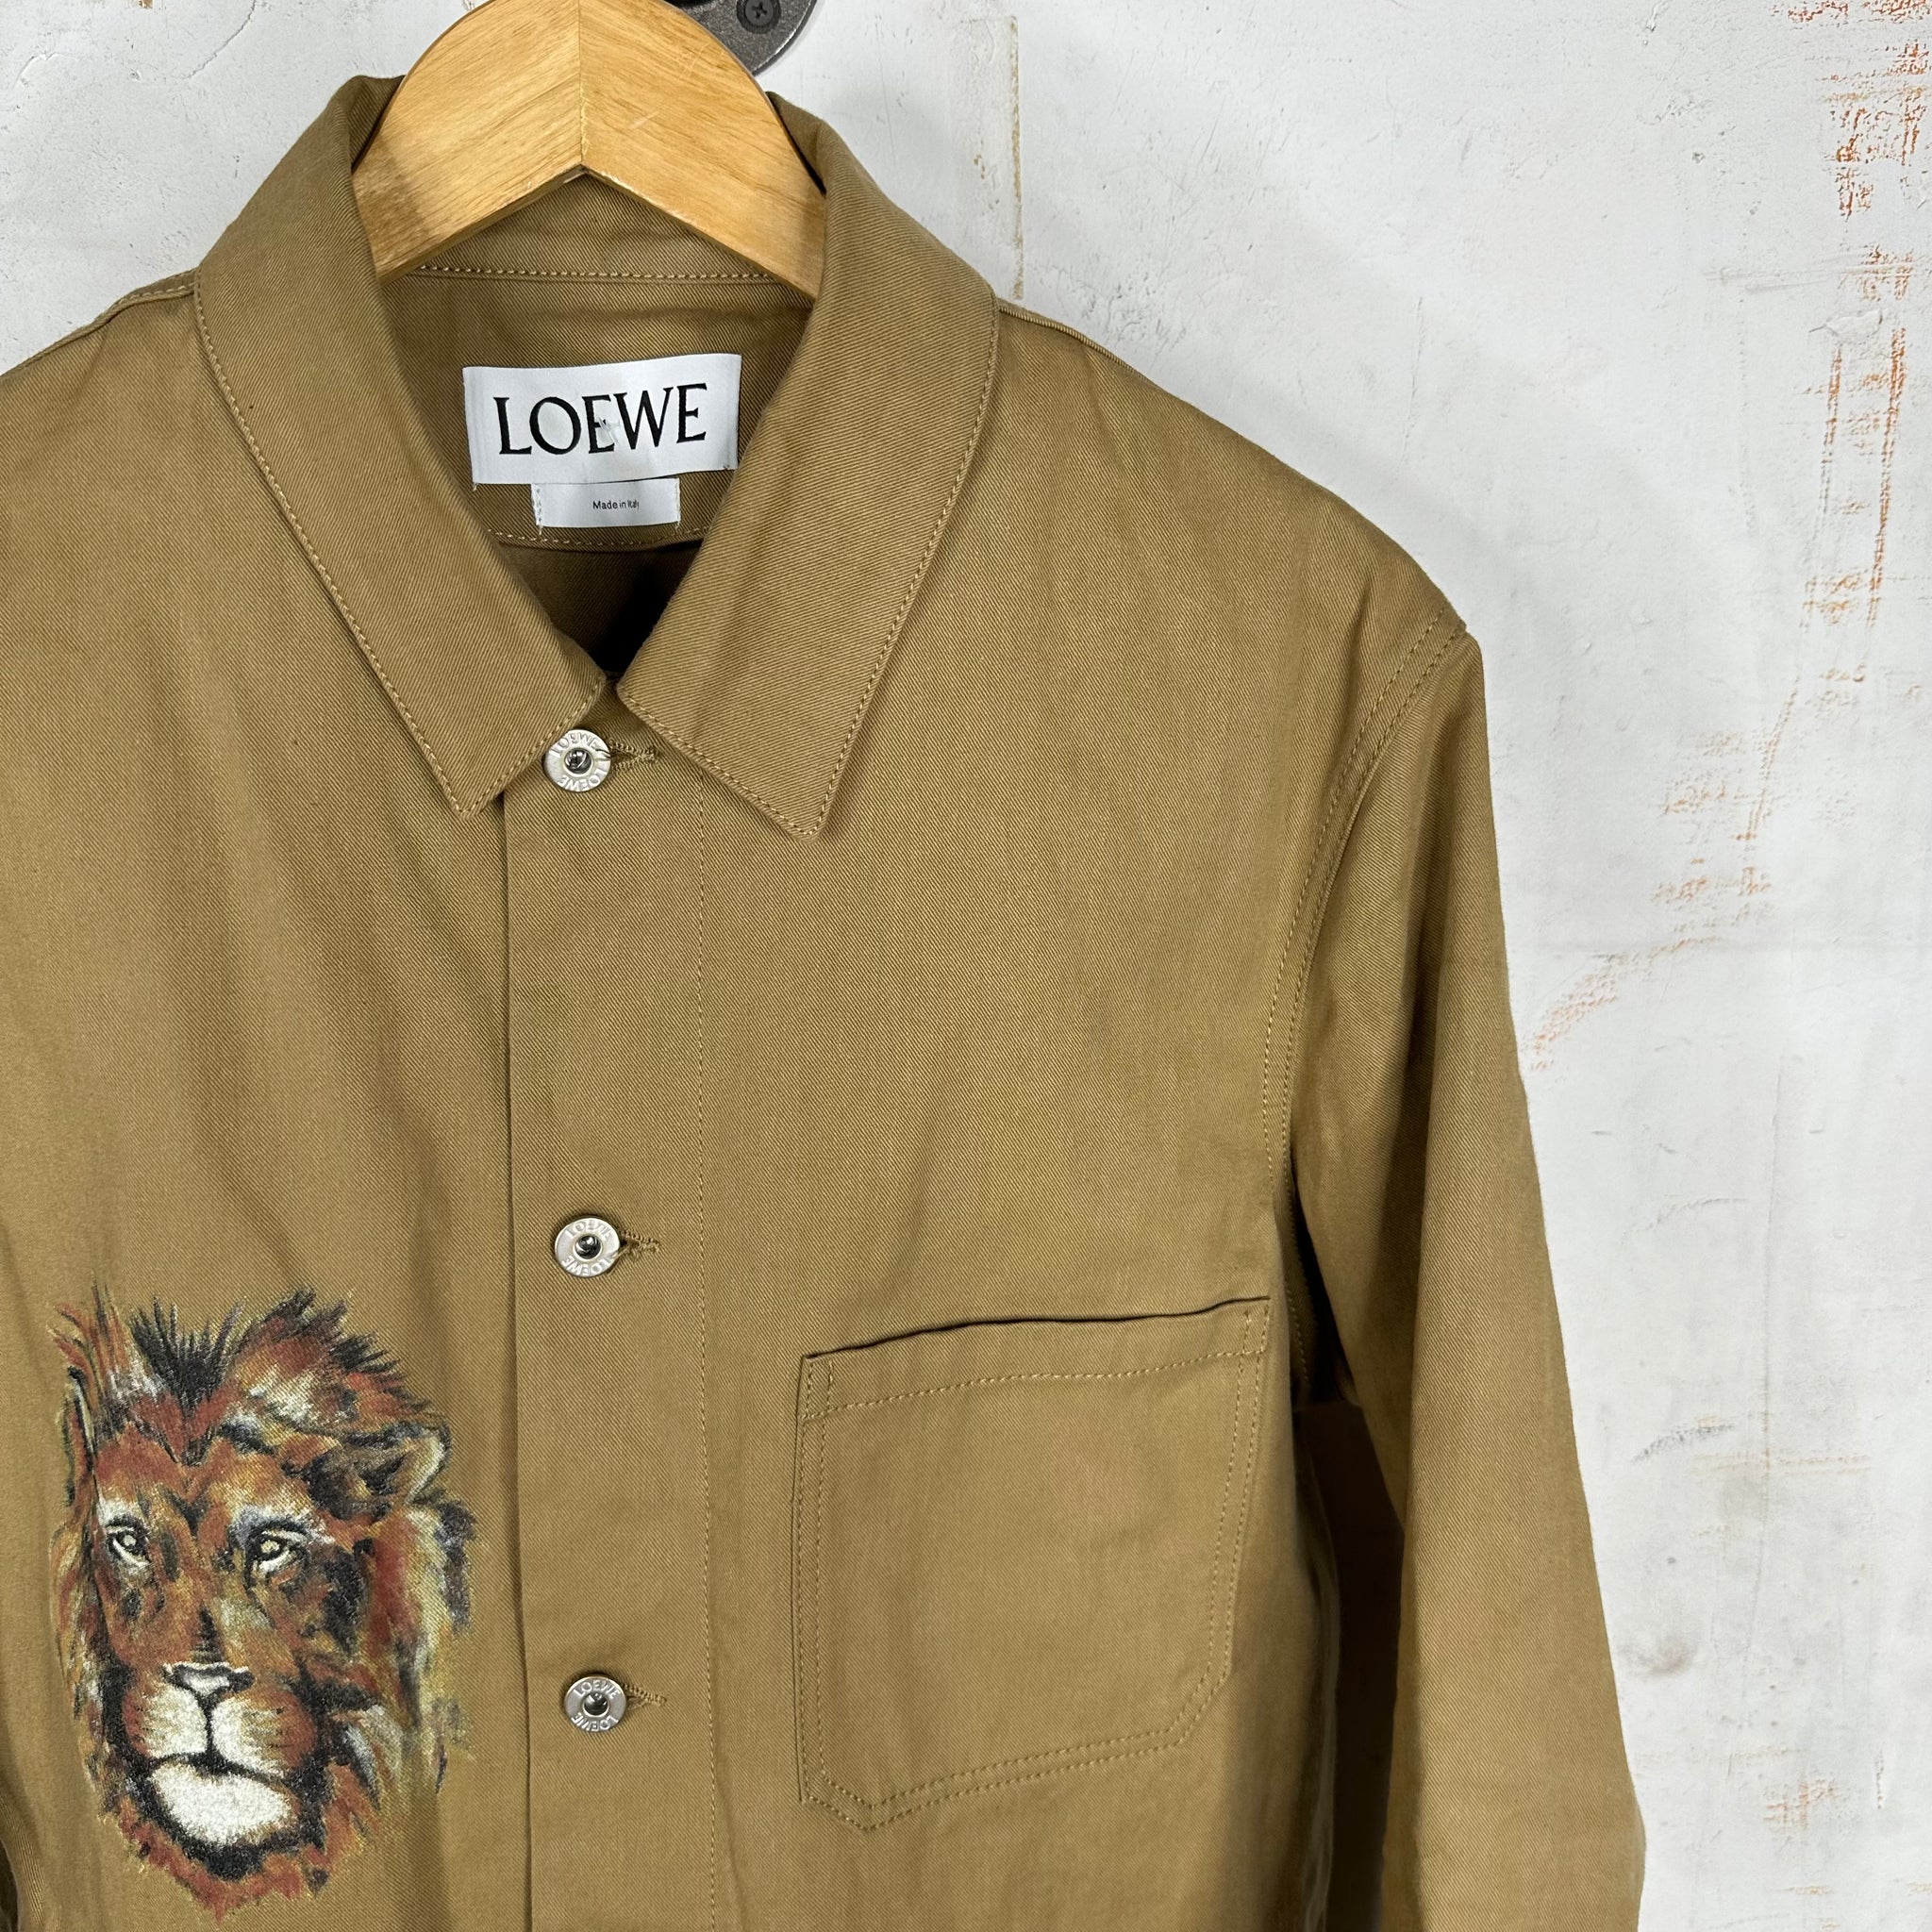 Loewe Safari Work Shirt